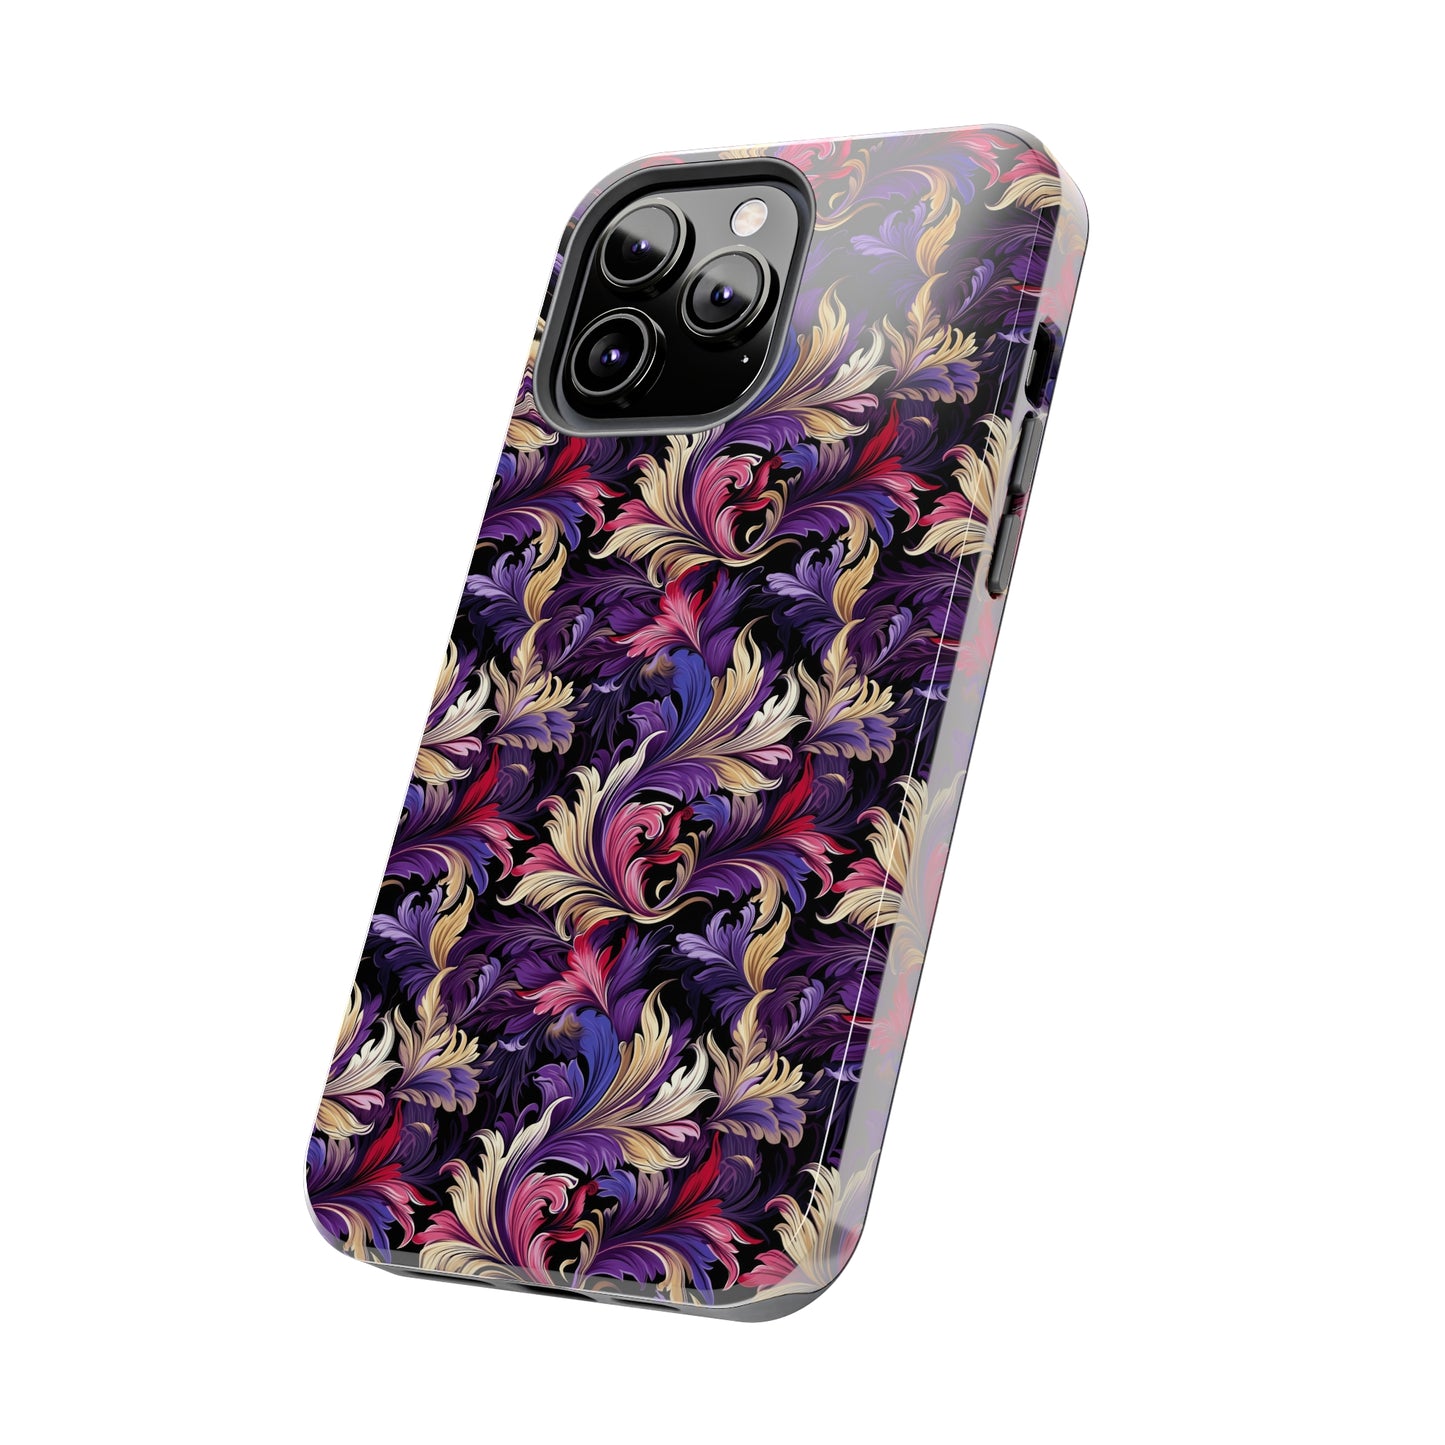 Purple, Gold & Pink Floral Swirls of Foliage Design Iphone Tough Phone Case